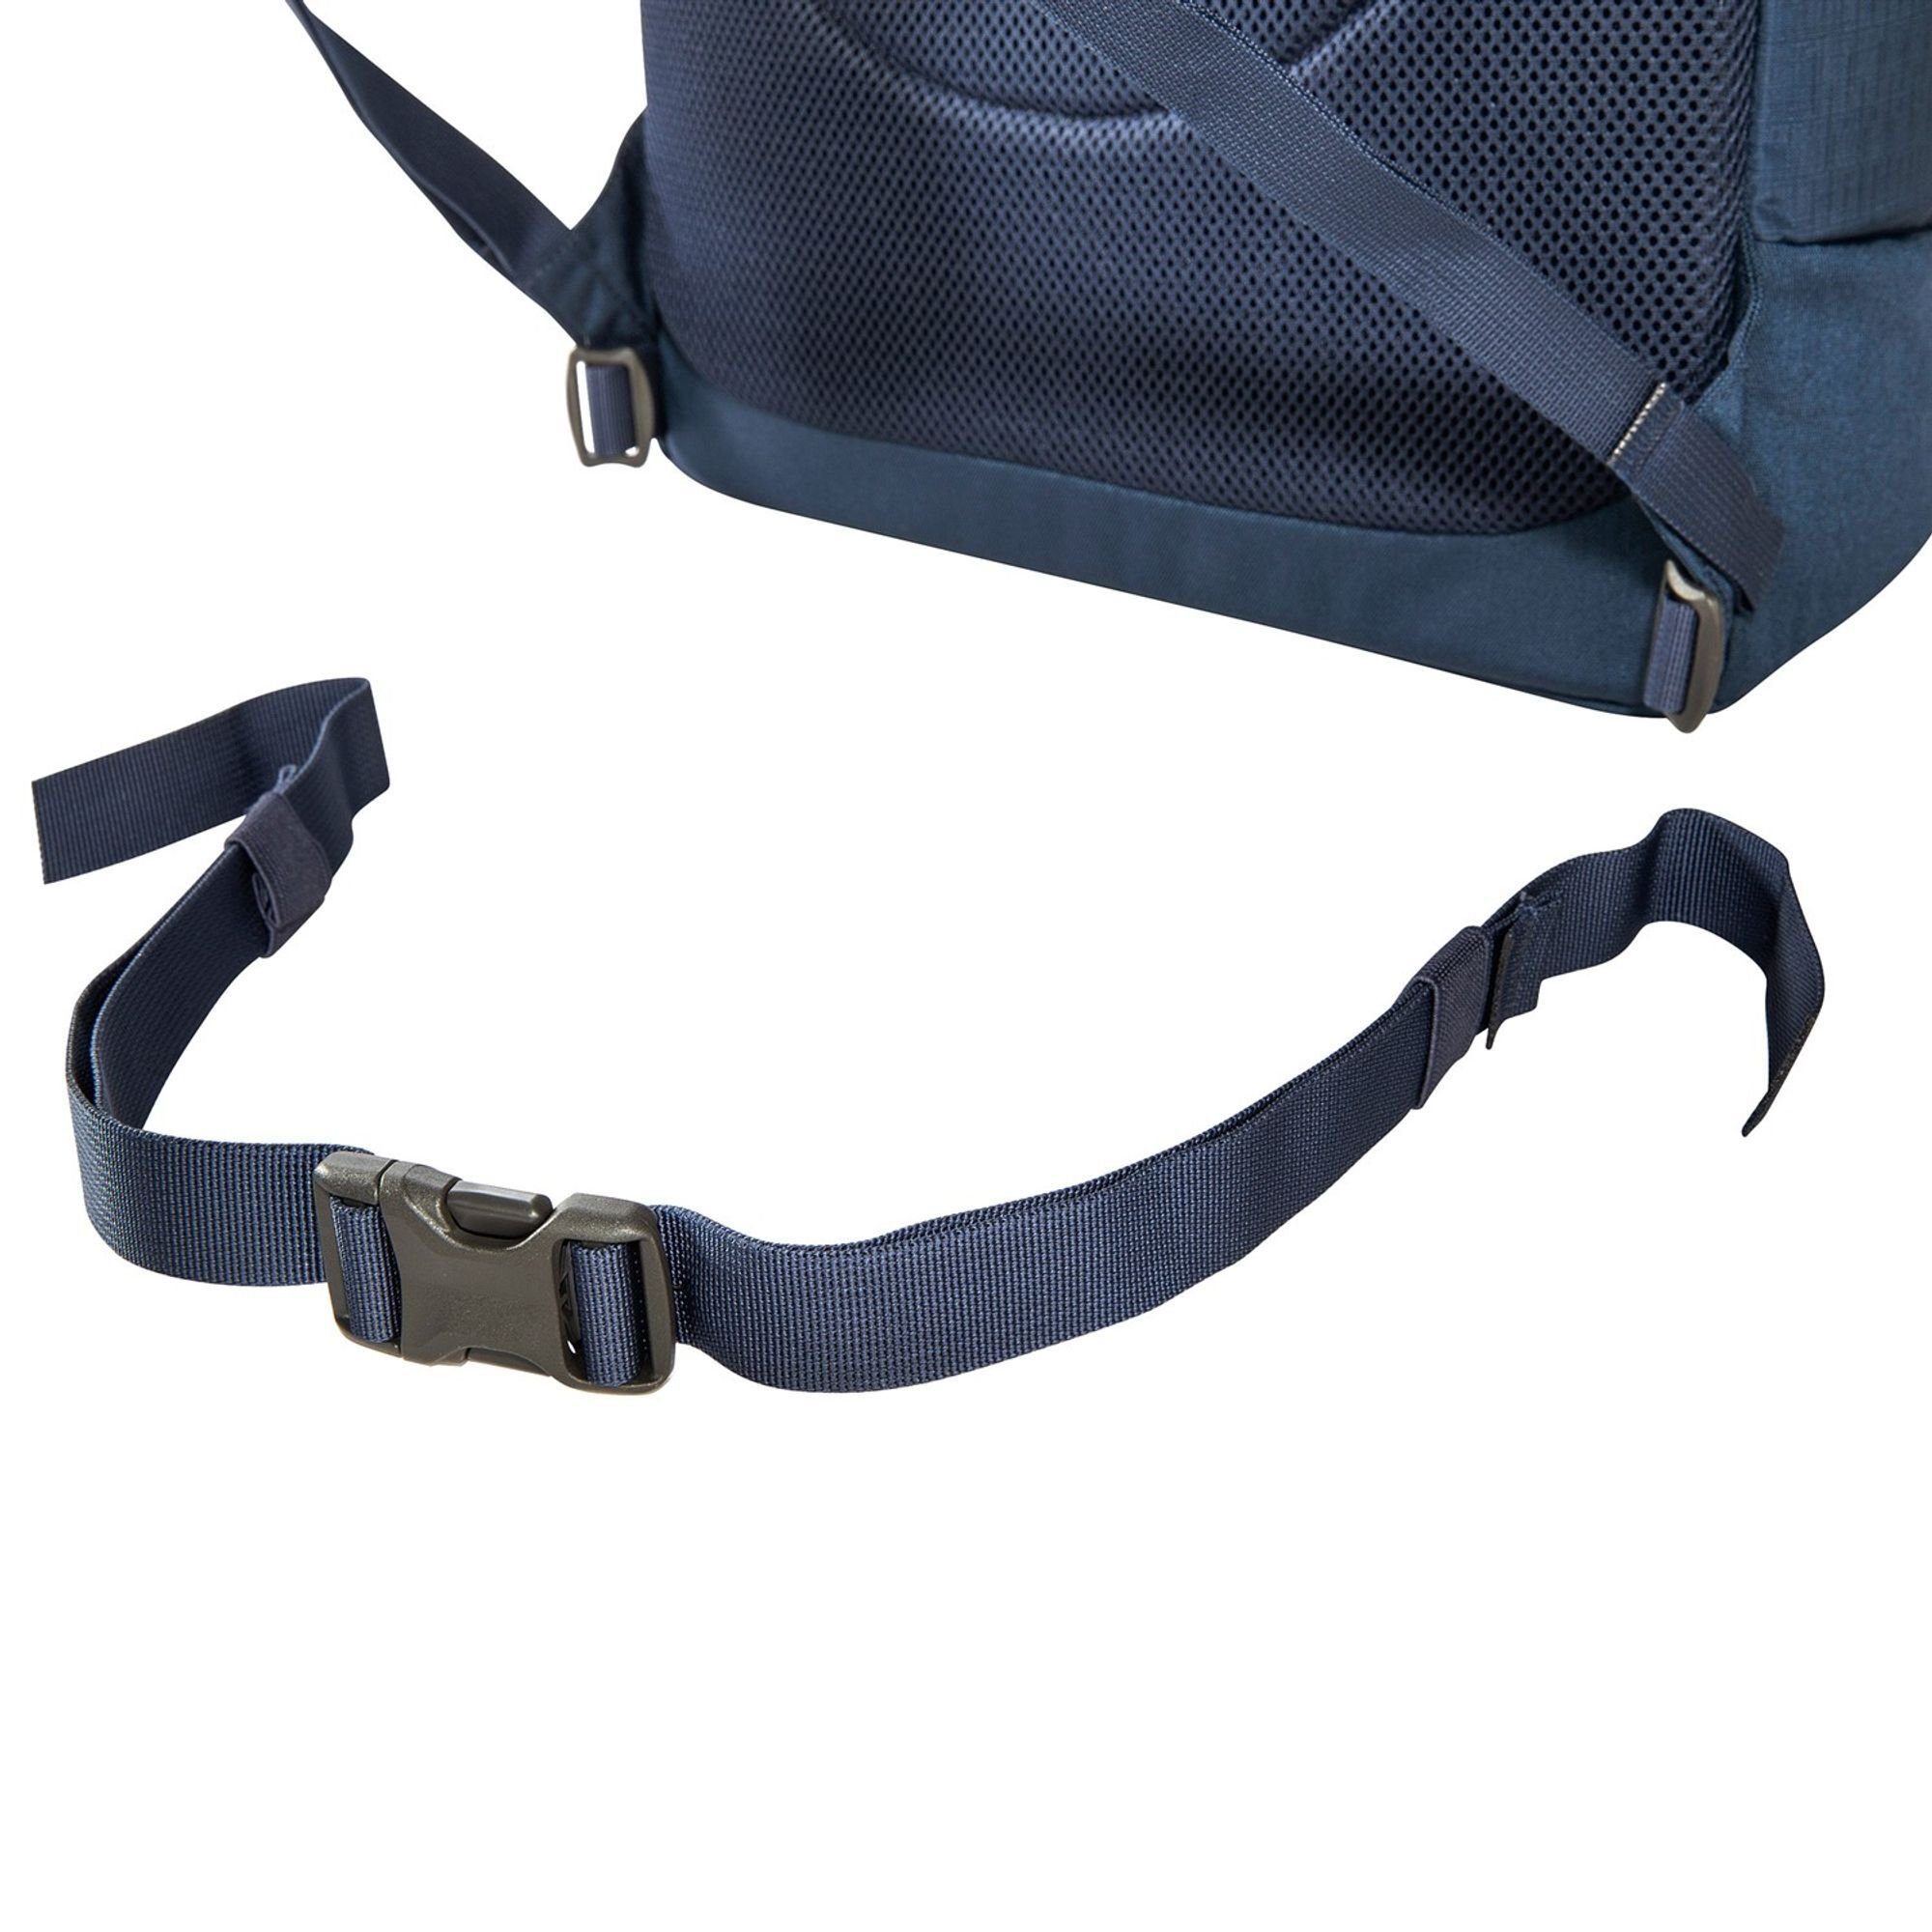 Pack, Daypack Rolltop TATONKA® navy Polyamid Grip